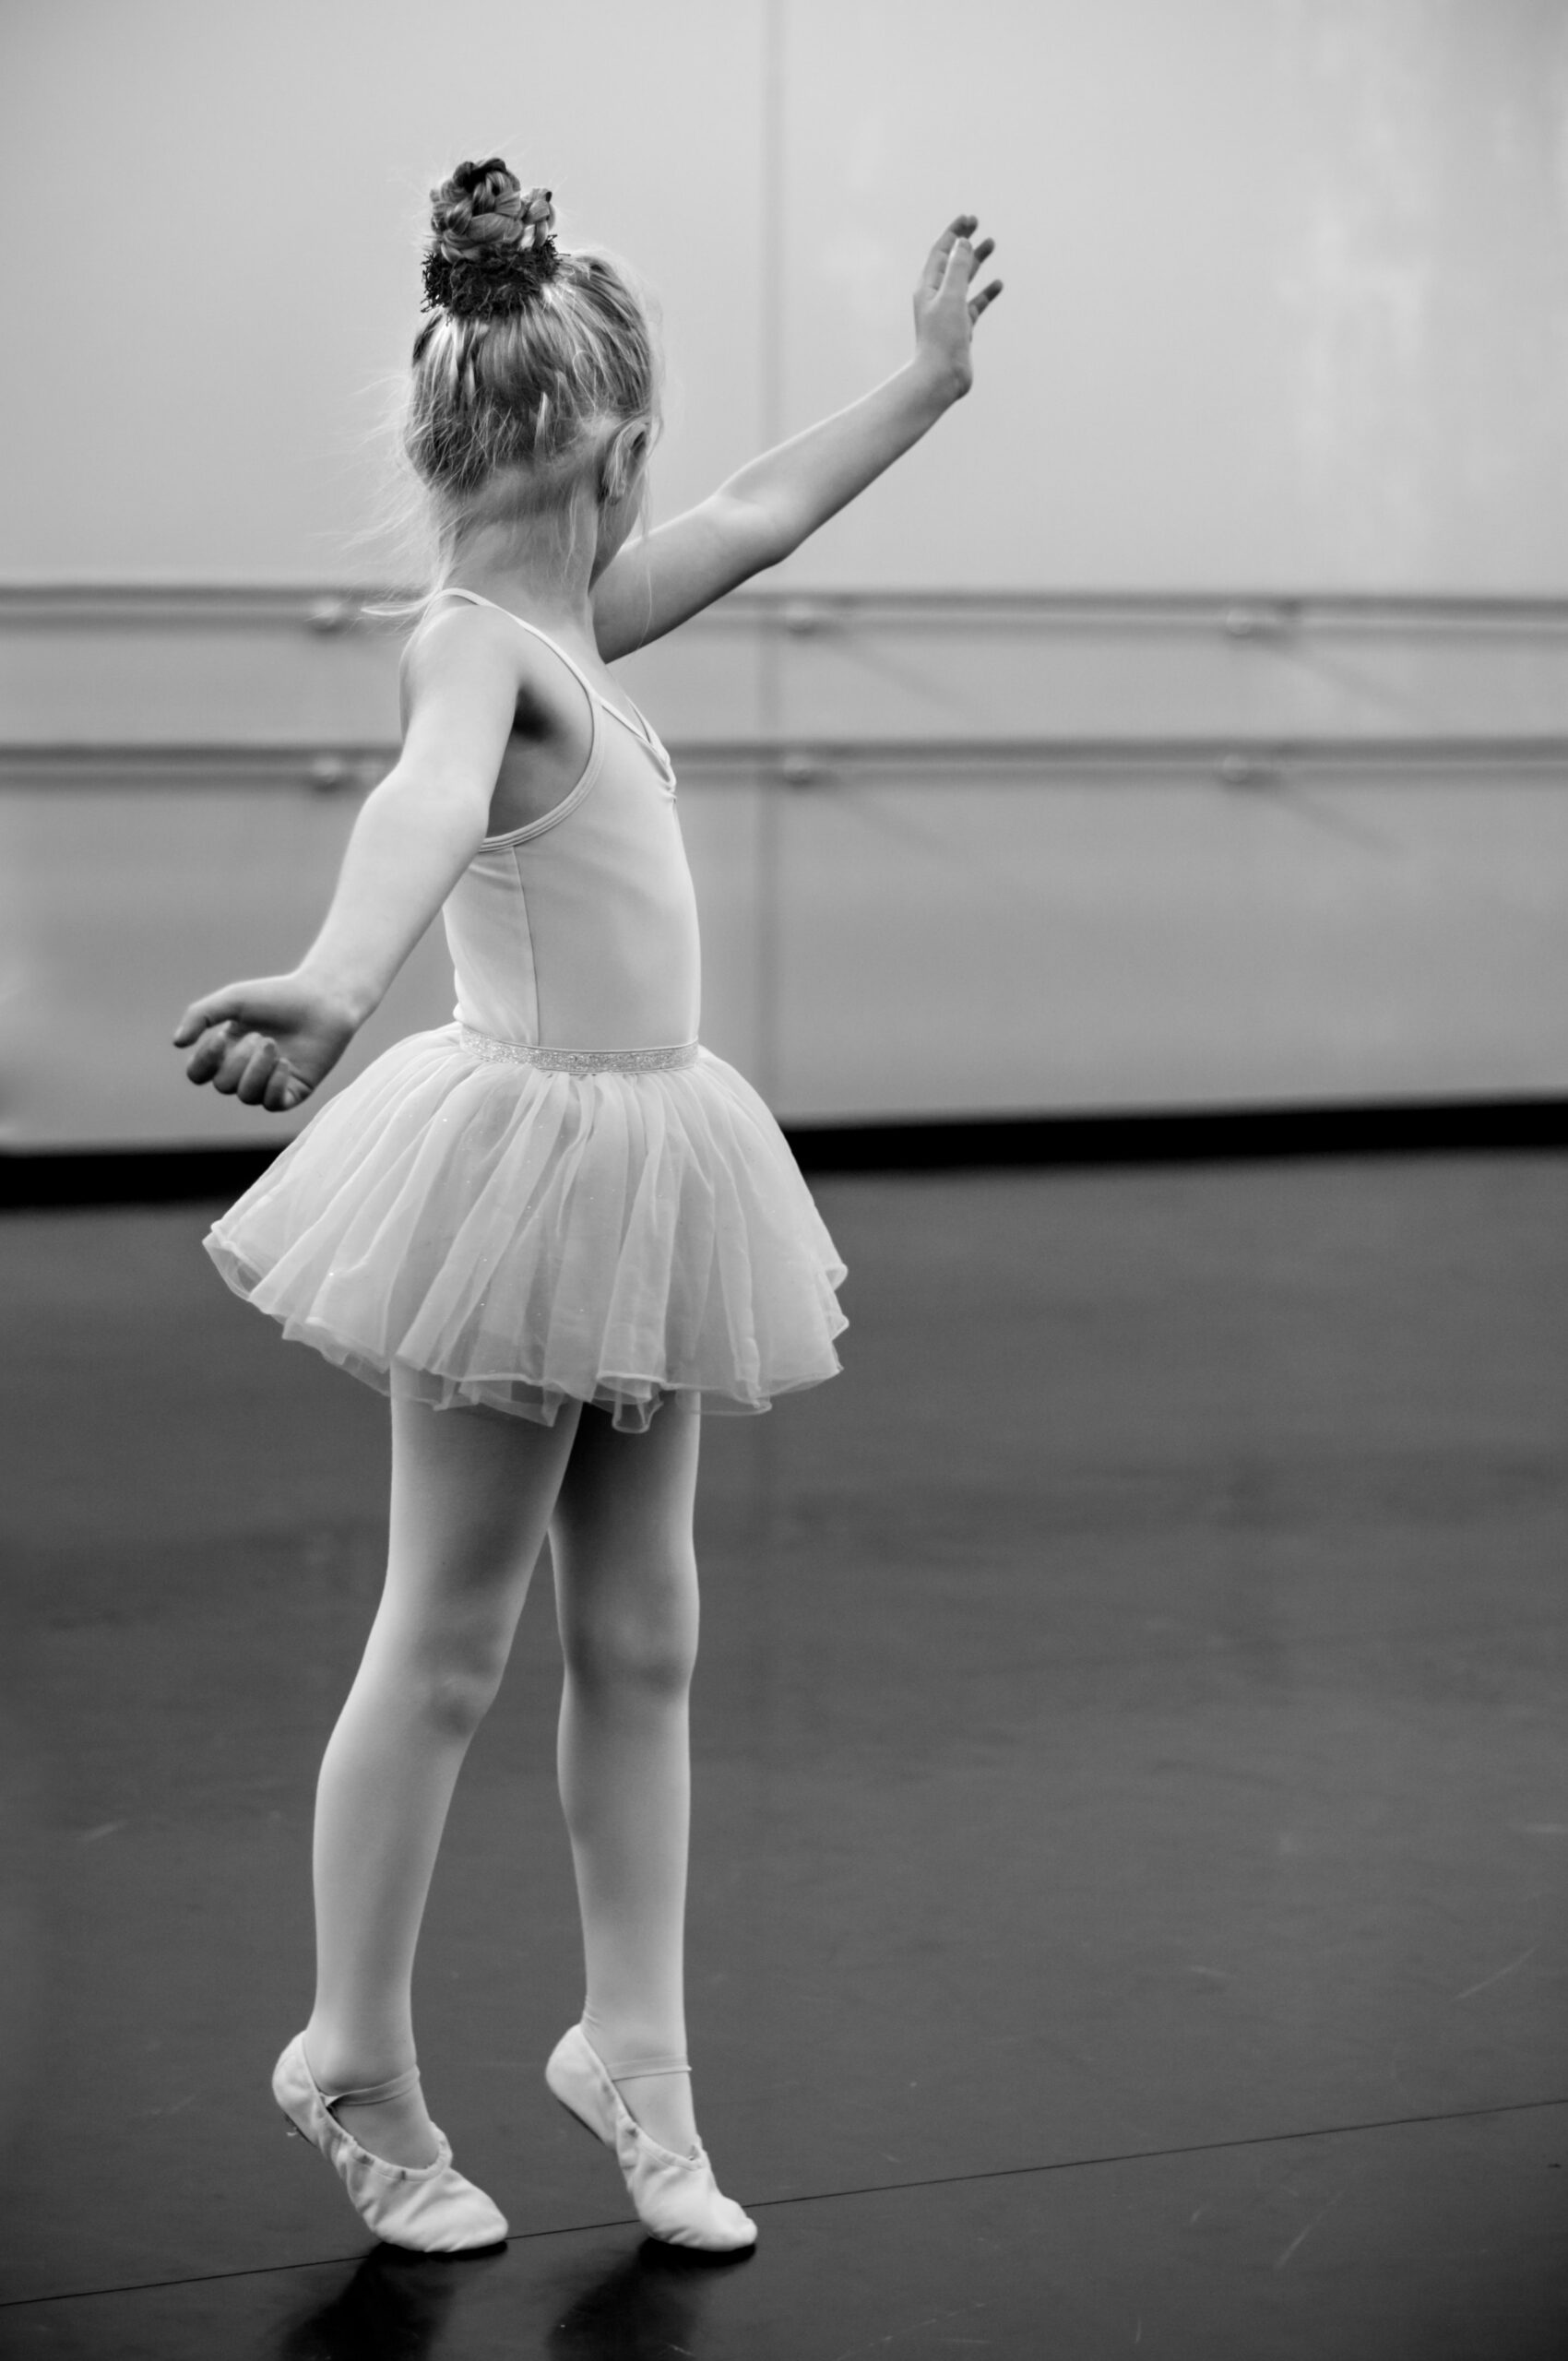 Young girl practicing ballet in a dance studio.